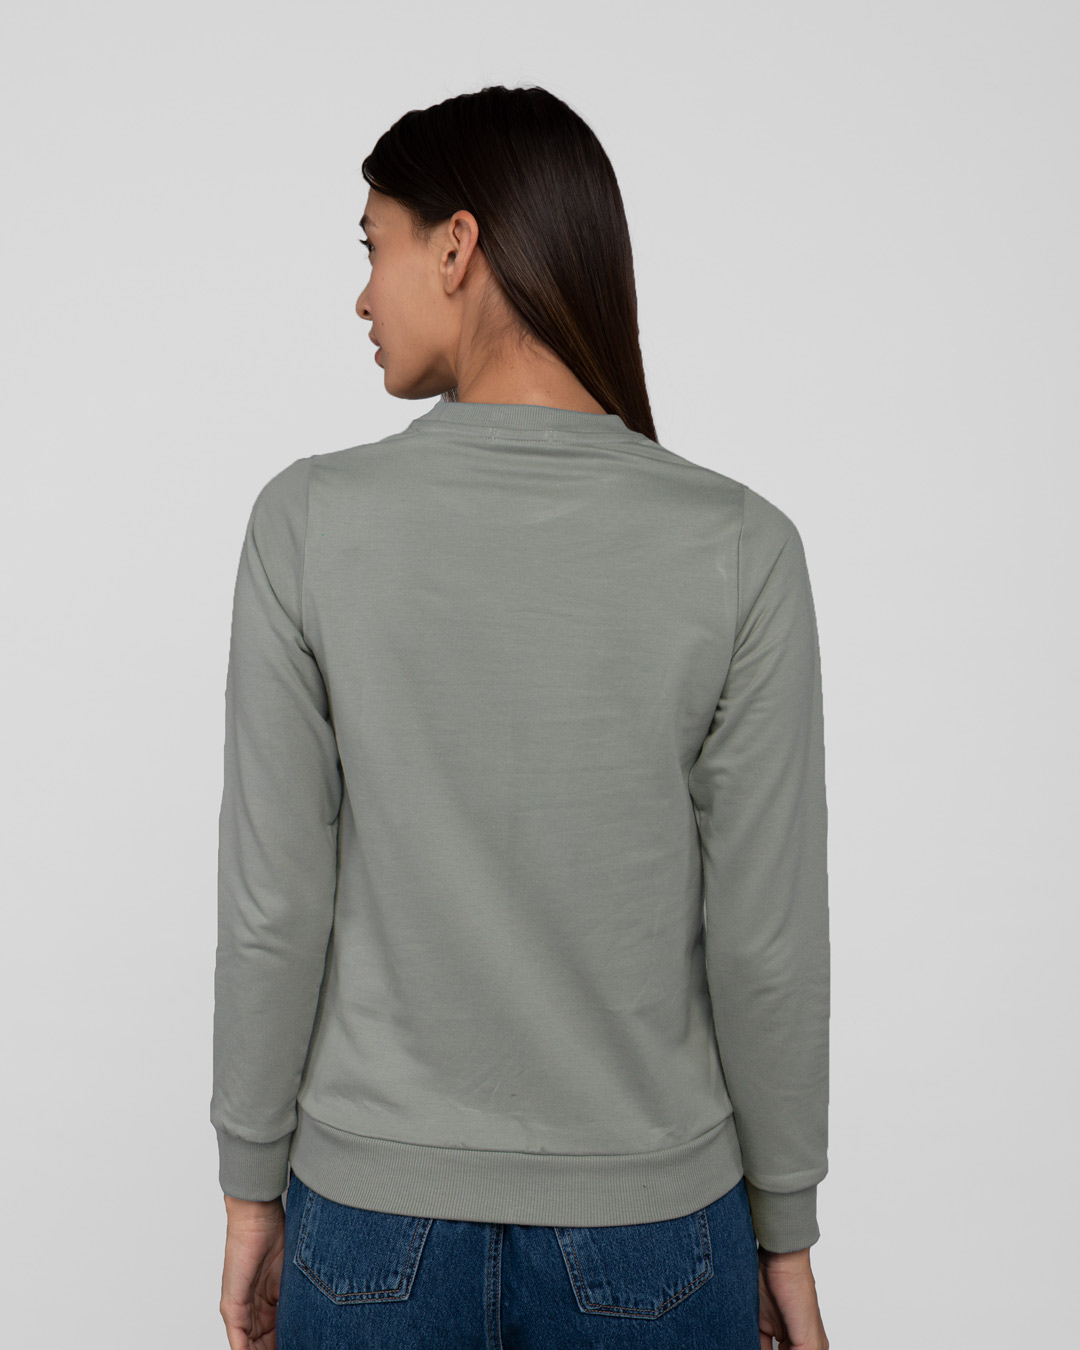 Shop Classic T & J Fleece Sweatshirt (TJL)-Back